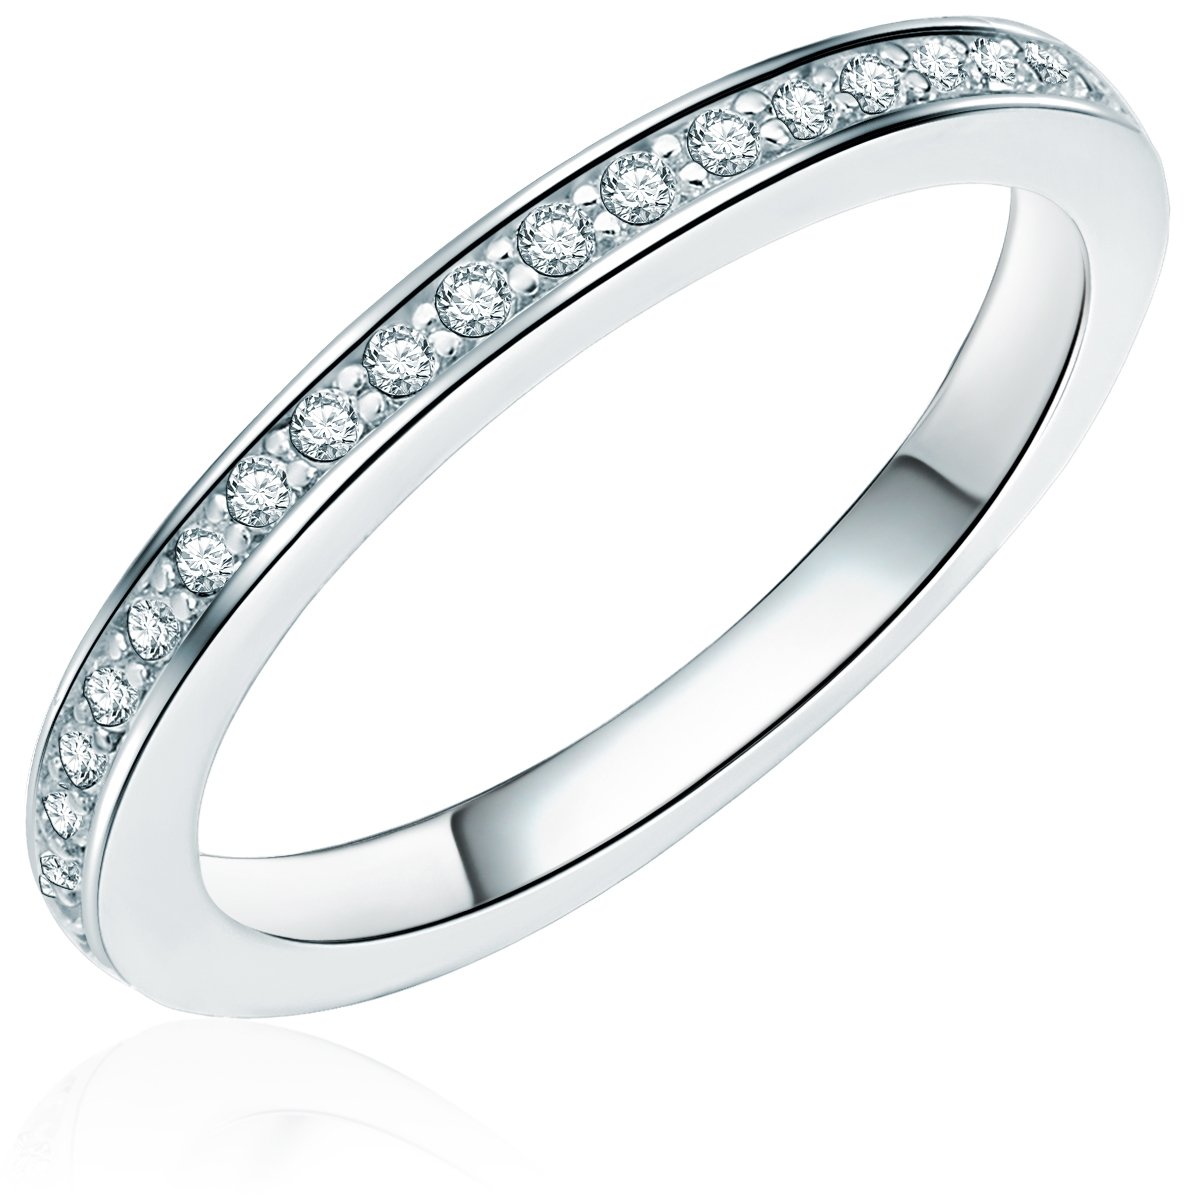 Rafaela Donata Damen-Ring 925 Sterling Silber Zirkonia weiß - Silberring in Memoire-Form mit Zirkonia farblos Vorsteckring 608370670